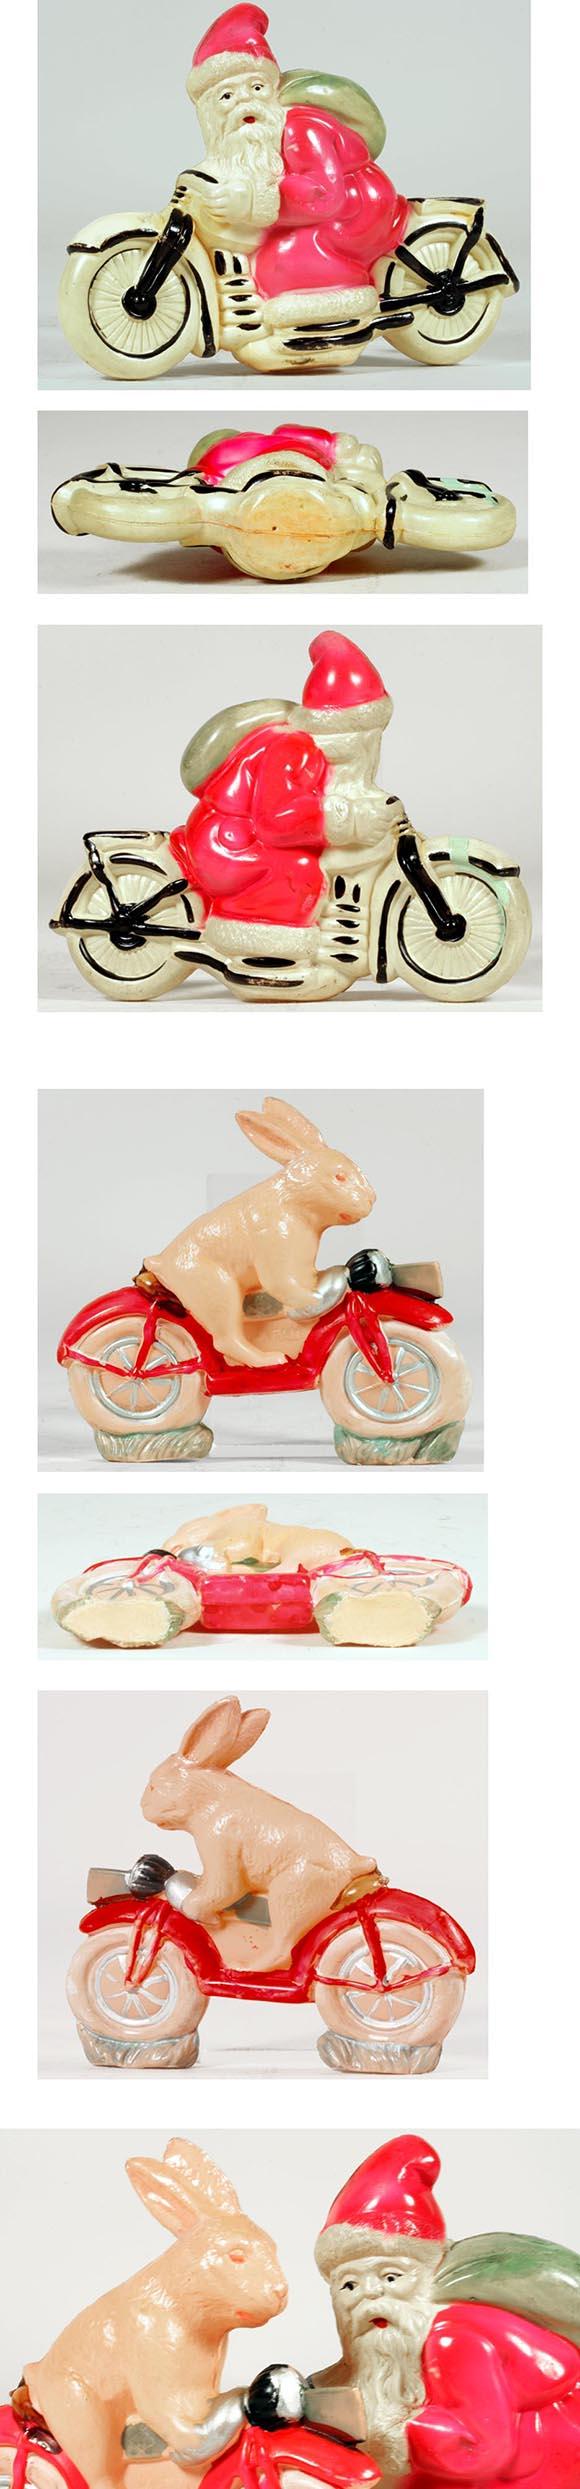 c.1935 Kanematsu, Santa Claus & Easter Bunny Celluloid Motorcycles